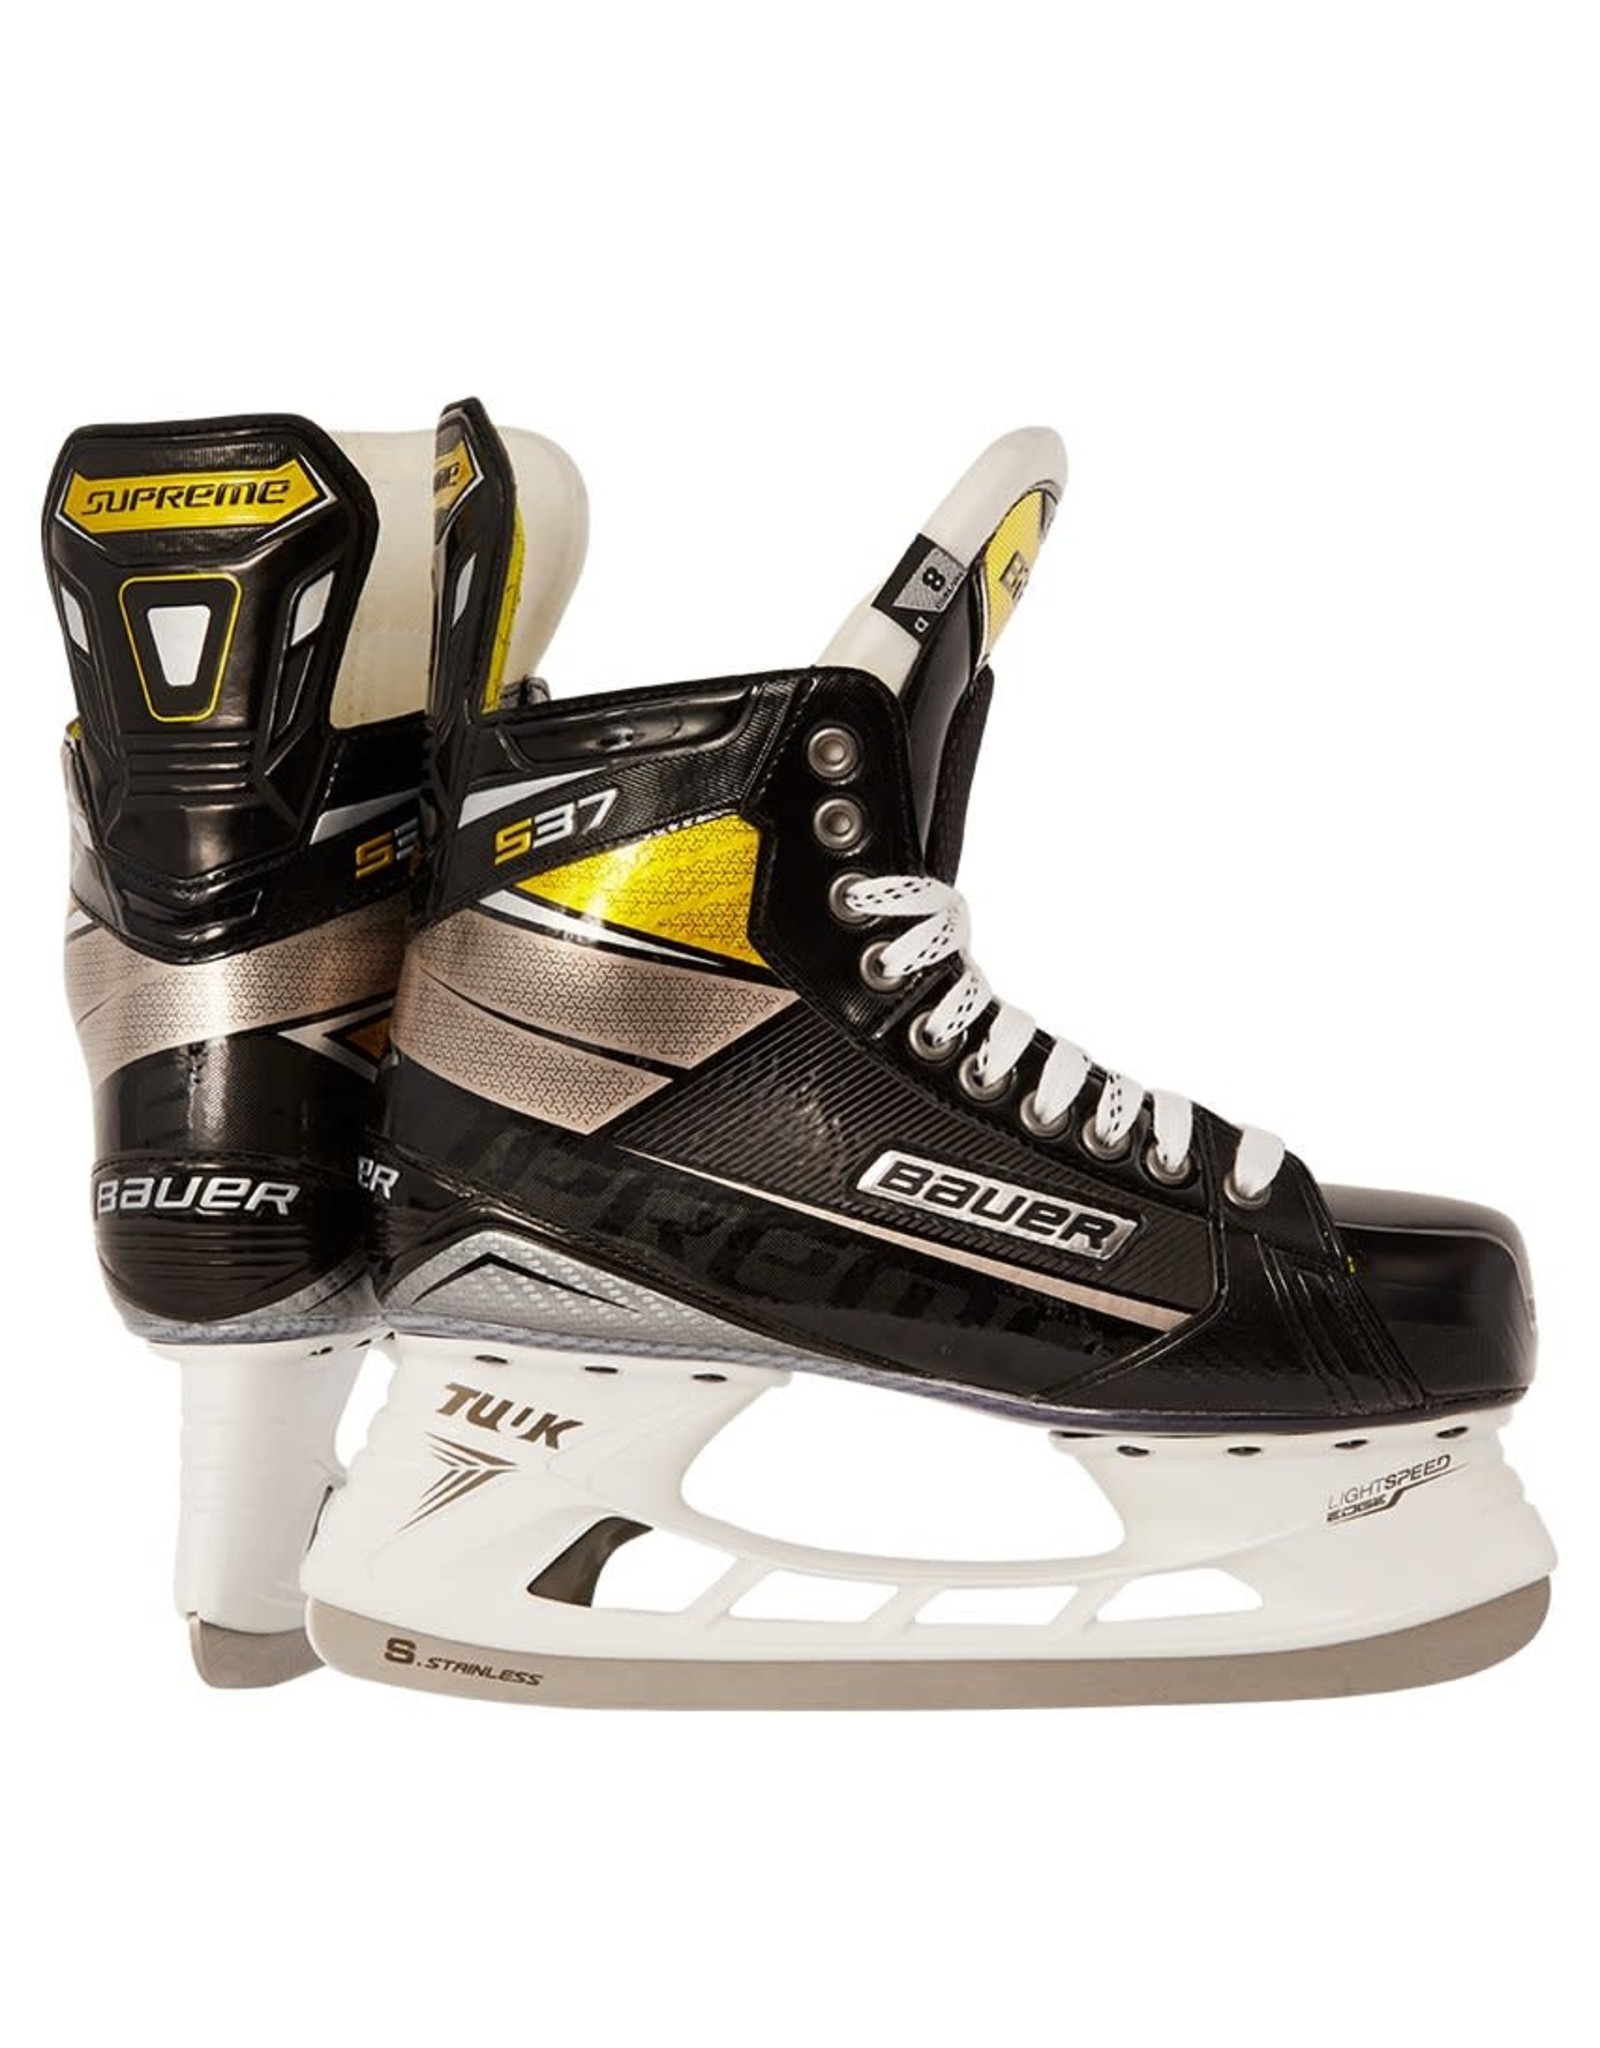 BAUER Supreme S37, Intermediate Hockey Skate